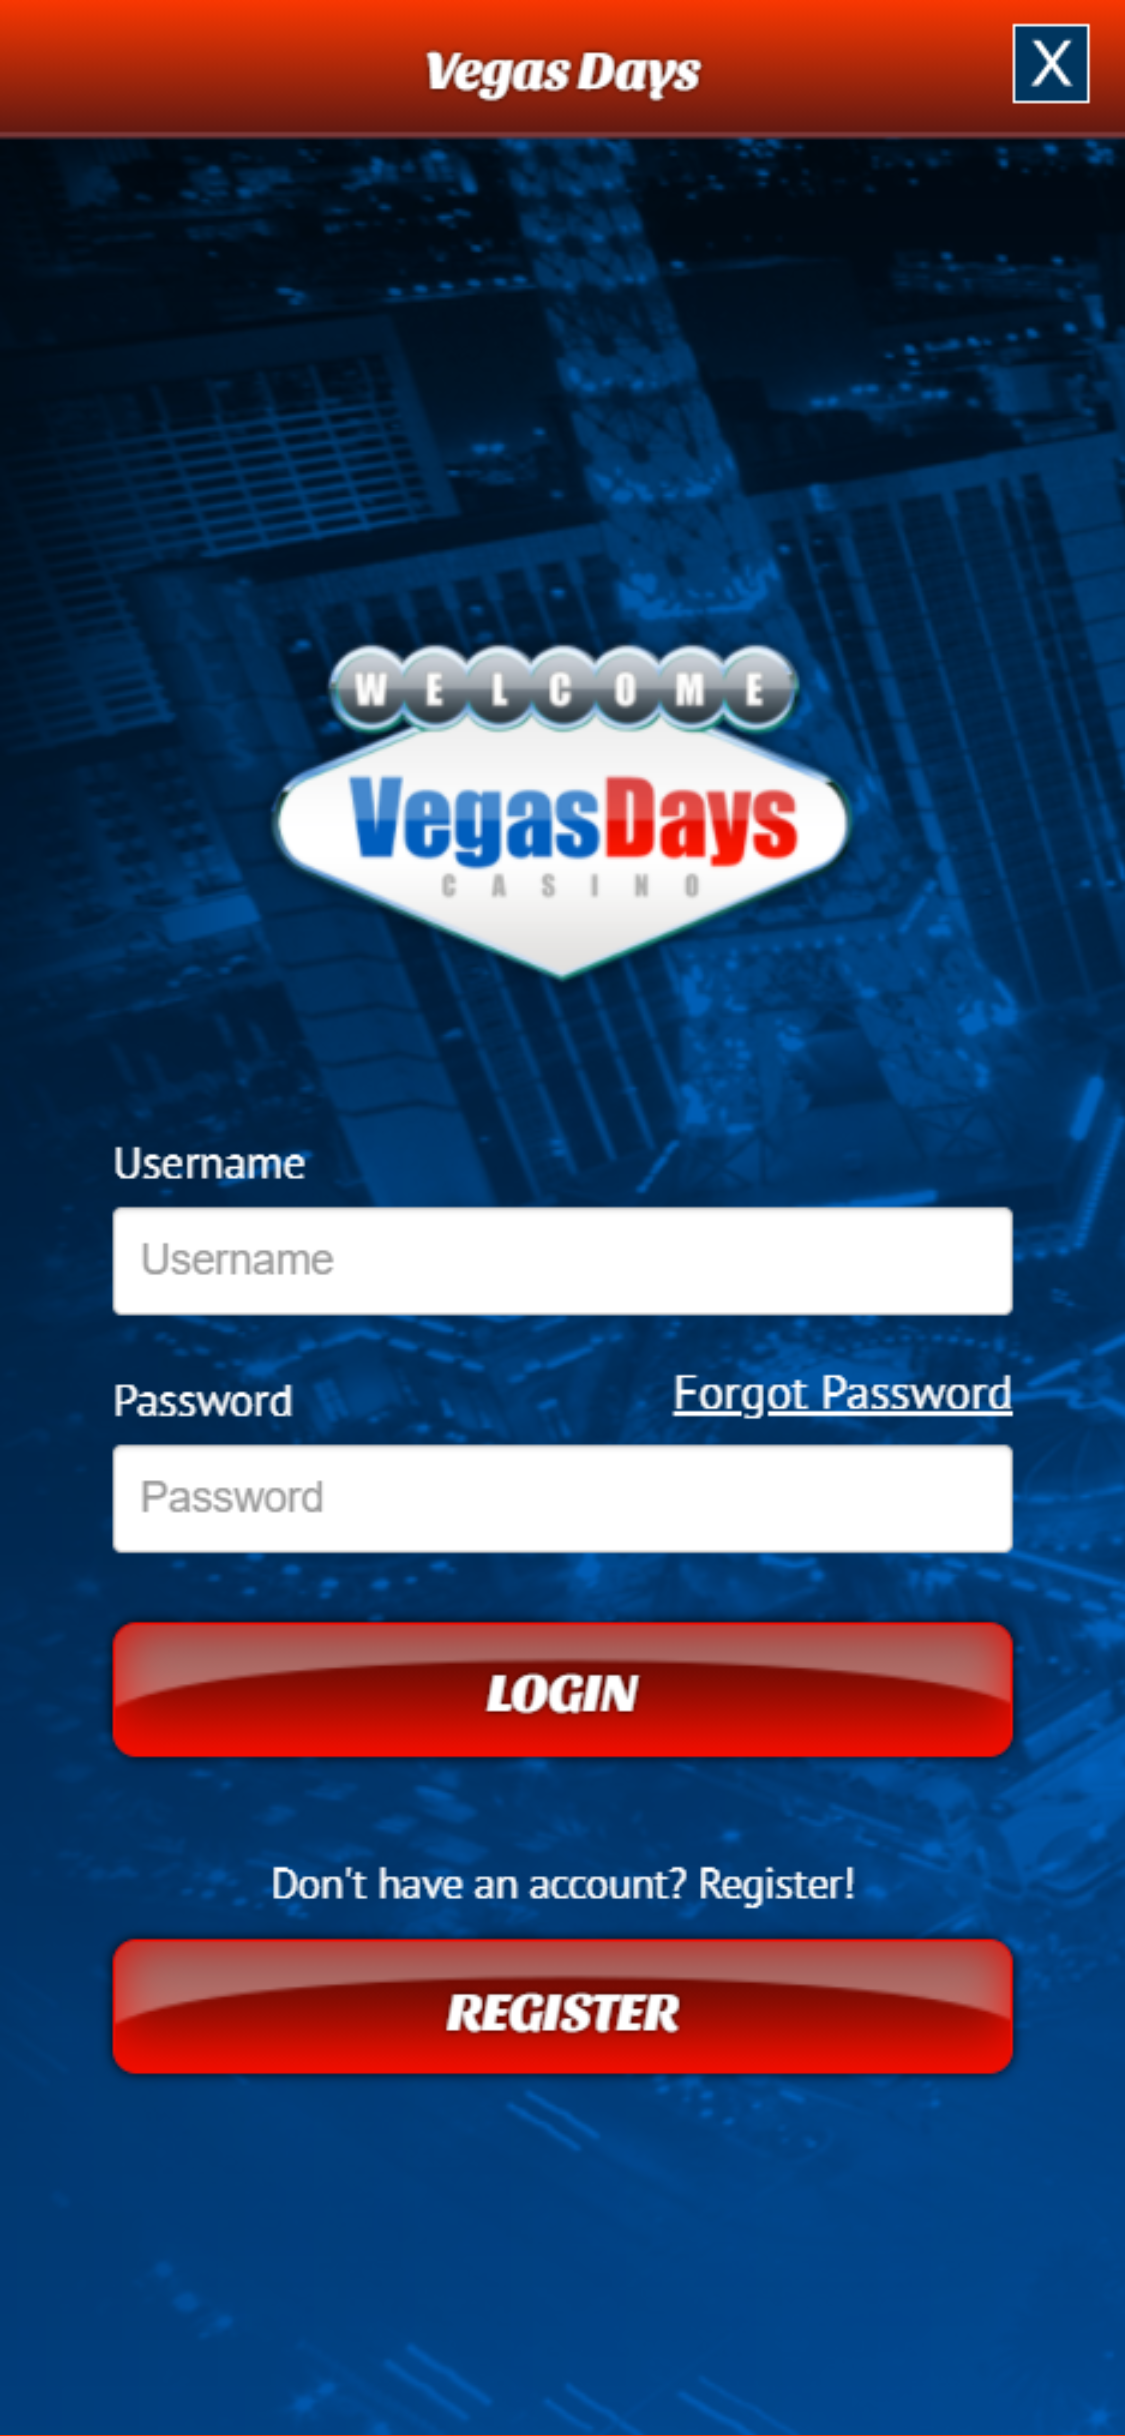 Vegas Days Casino Mobile Login Review